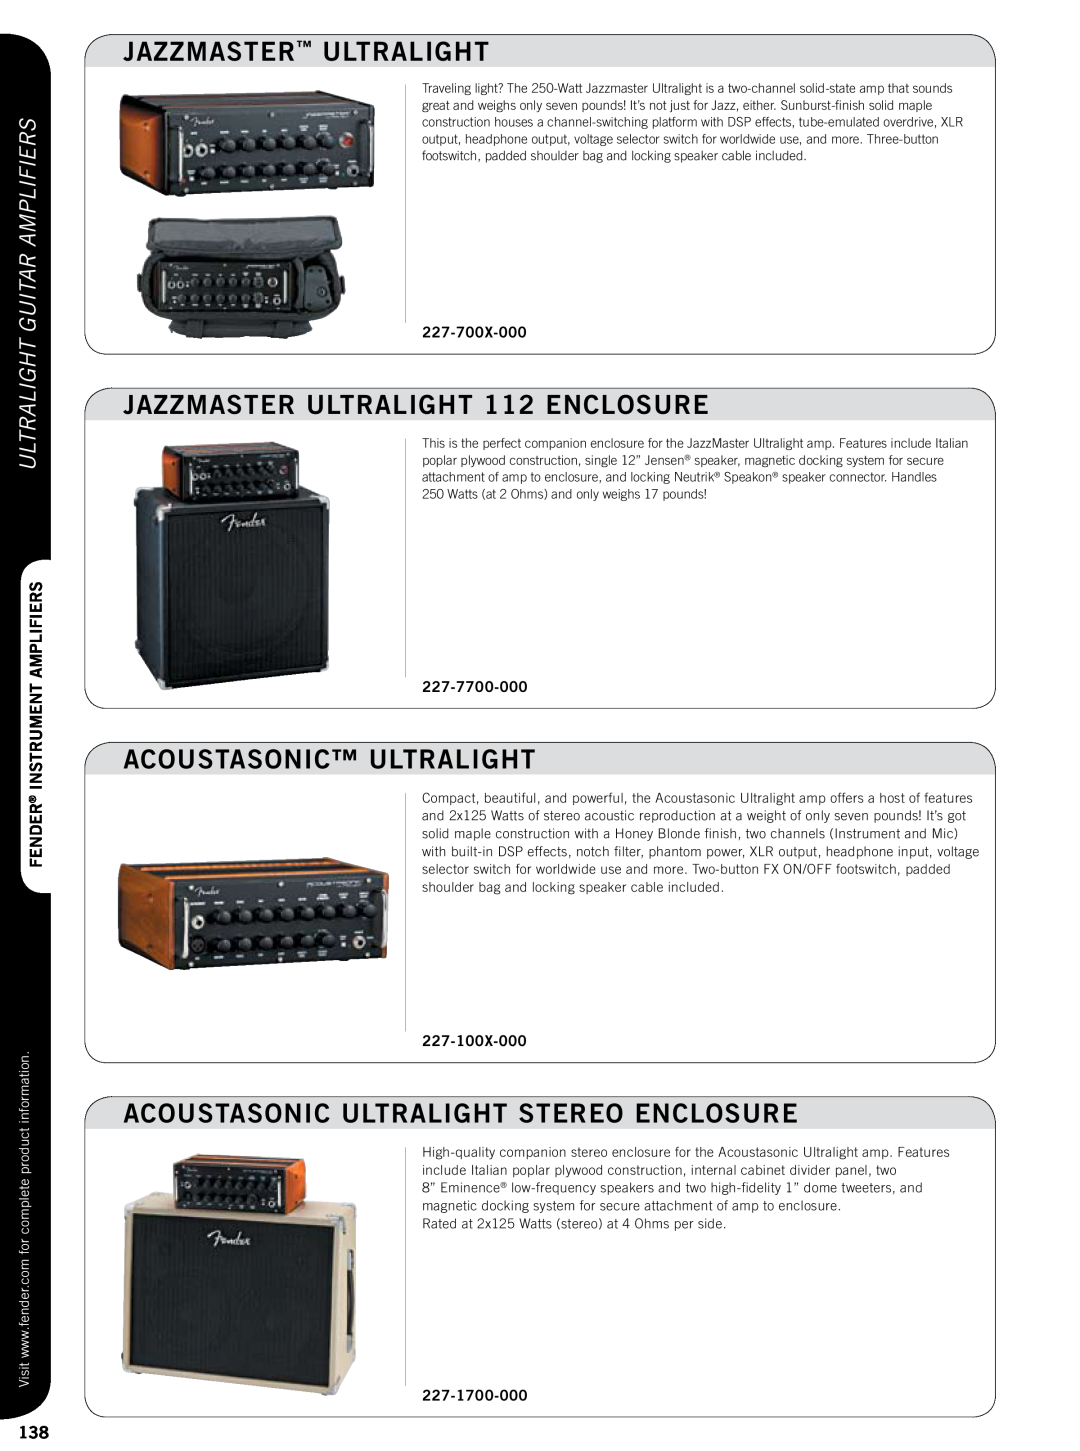 Fender 811-000X-010 Jazzmaster Ultralight, JAZZMASTER ULTRALIGHT 112 ENCLOSURE, Acoustasonic Ultralight, 227-700X-000 